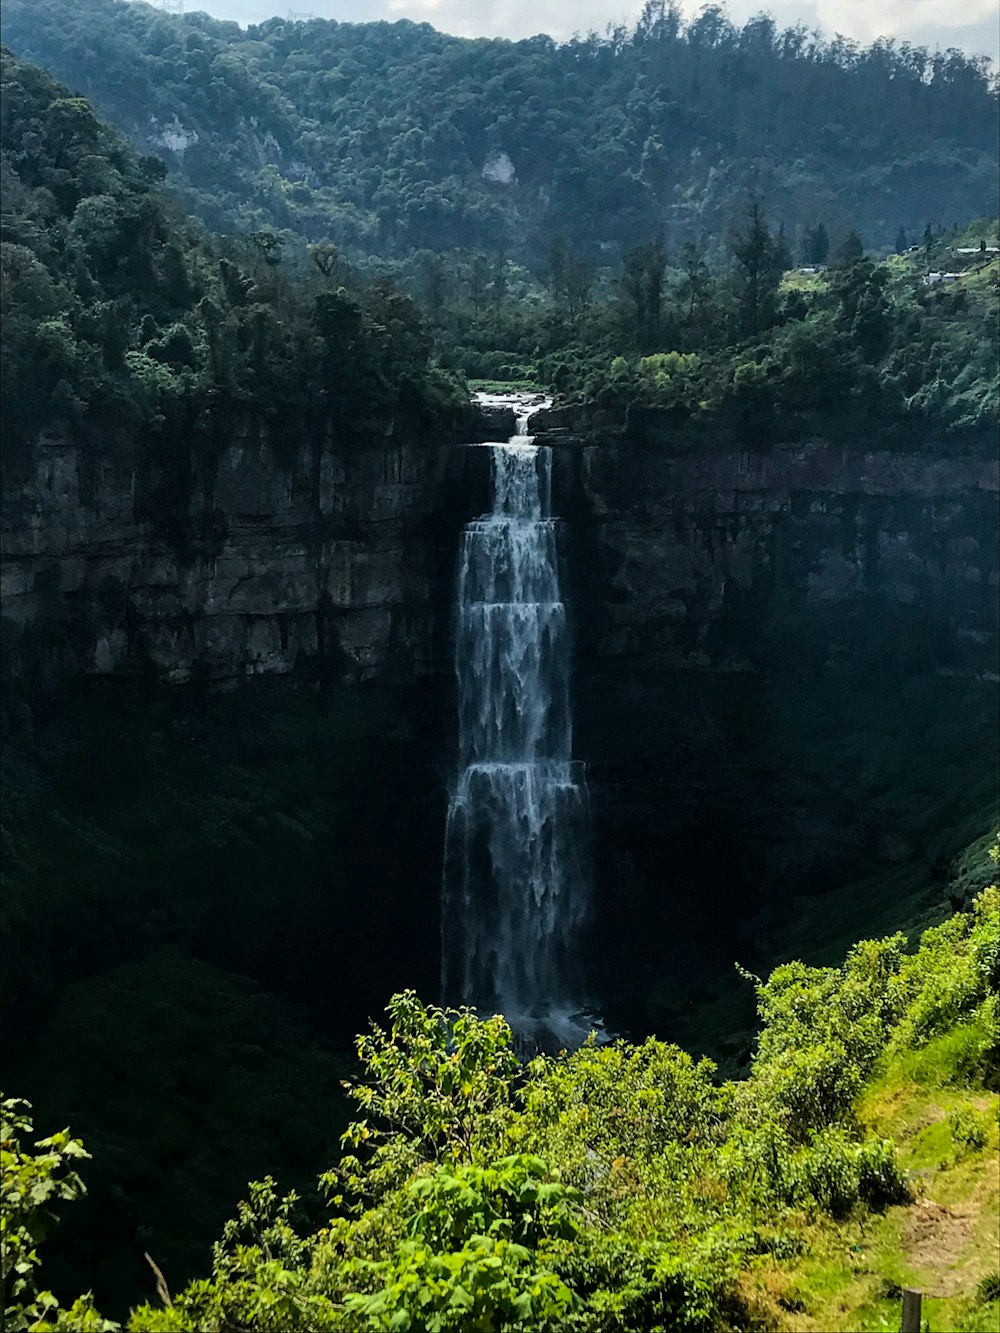 flowing waterfalls near trees during daytime